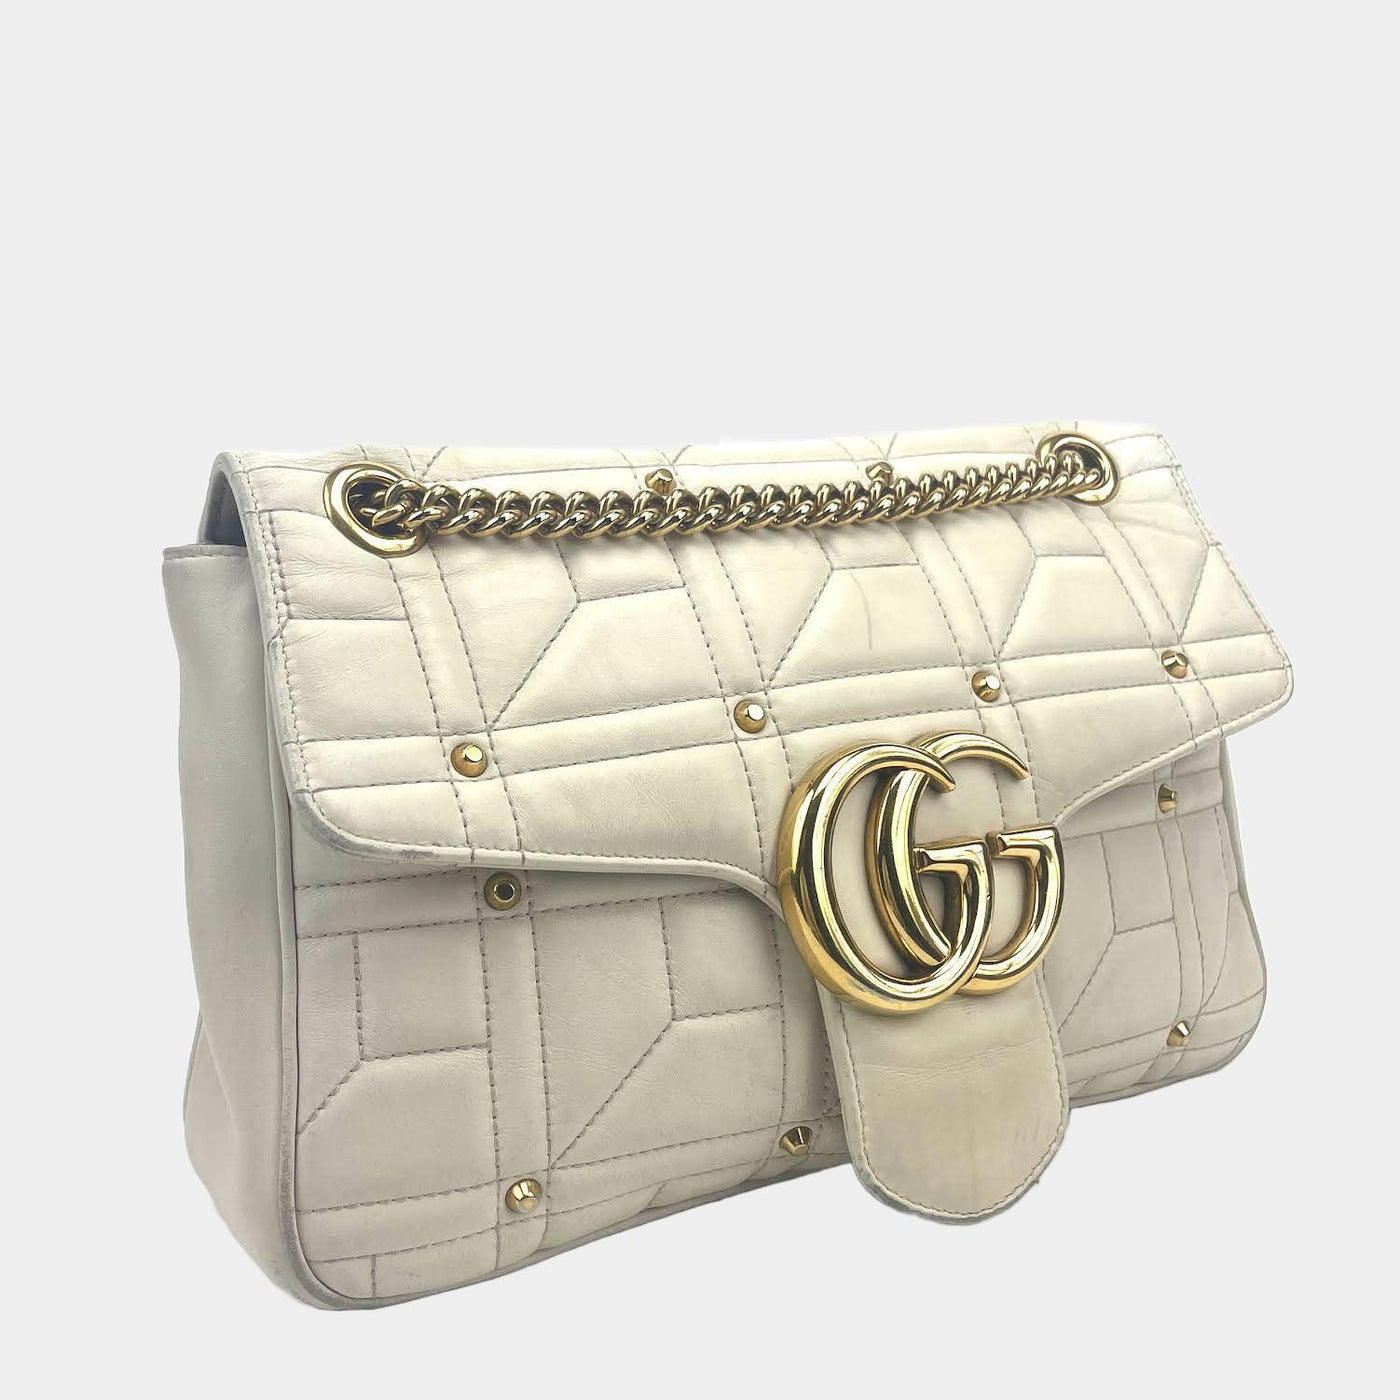 Gucci GG Marmont Flap Bag Studded Matelasse  - OUTLET ITEM FINAL SALE - ALB